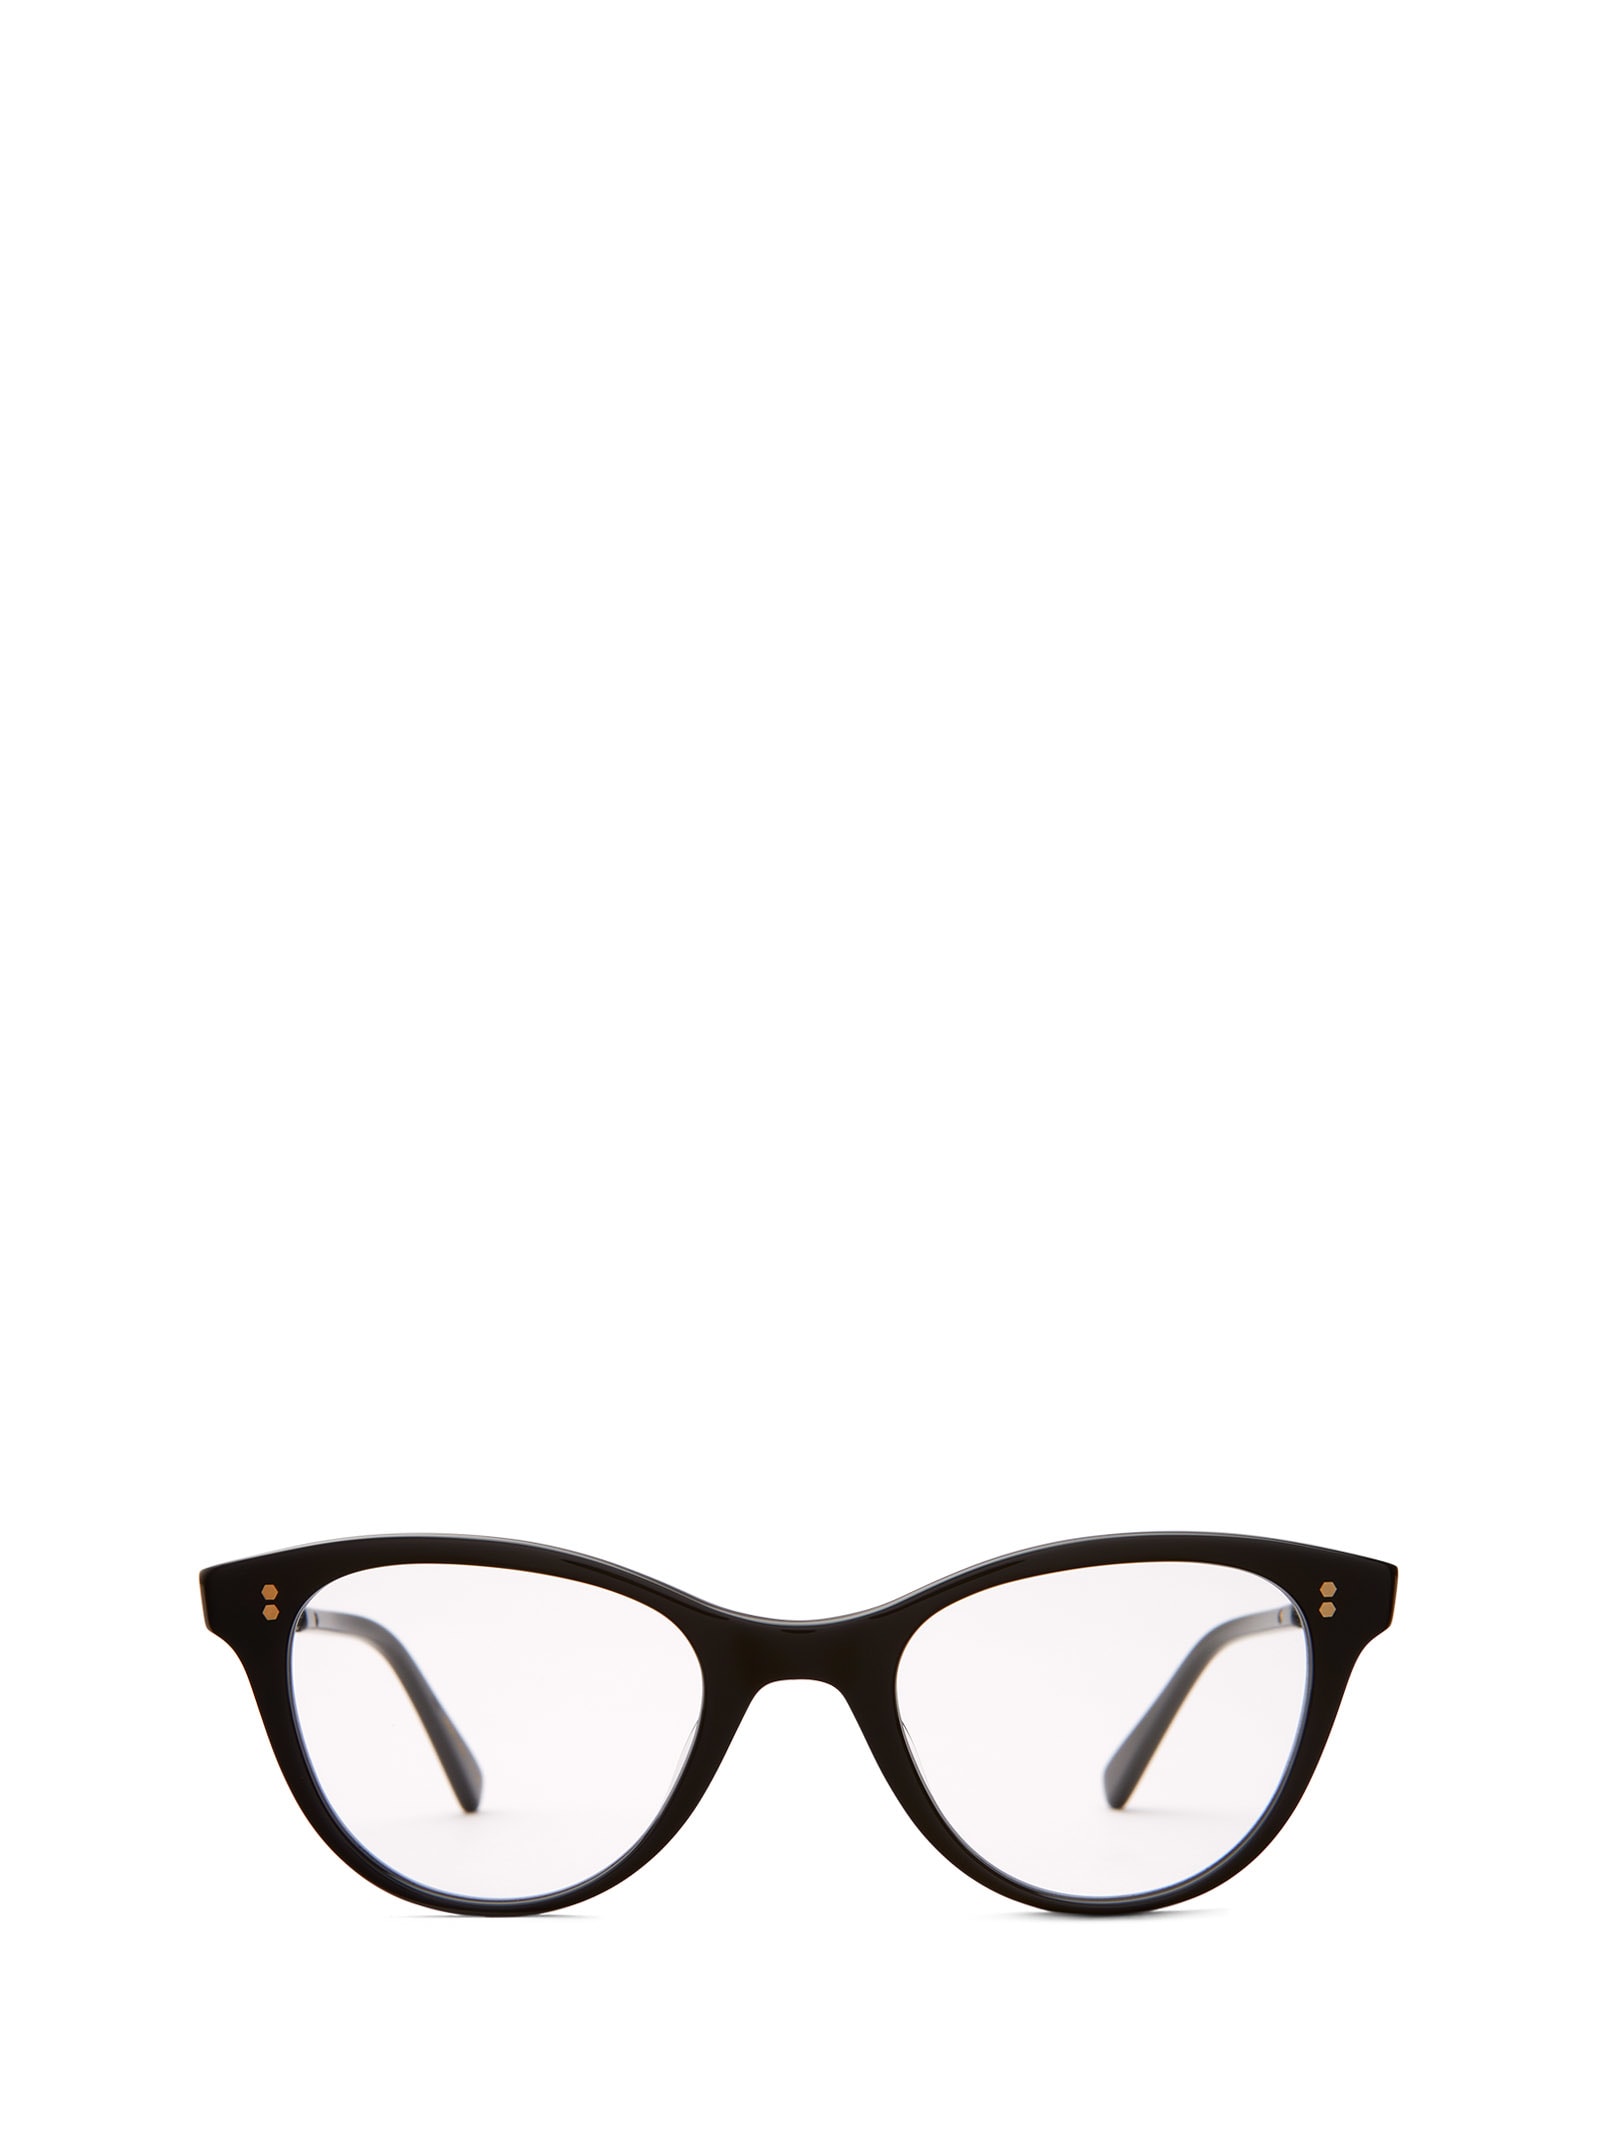 Taylor C Black-12k White Gold Glasses